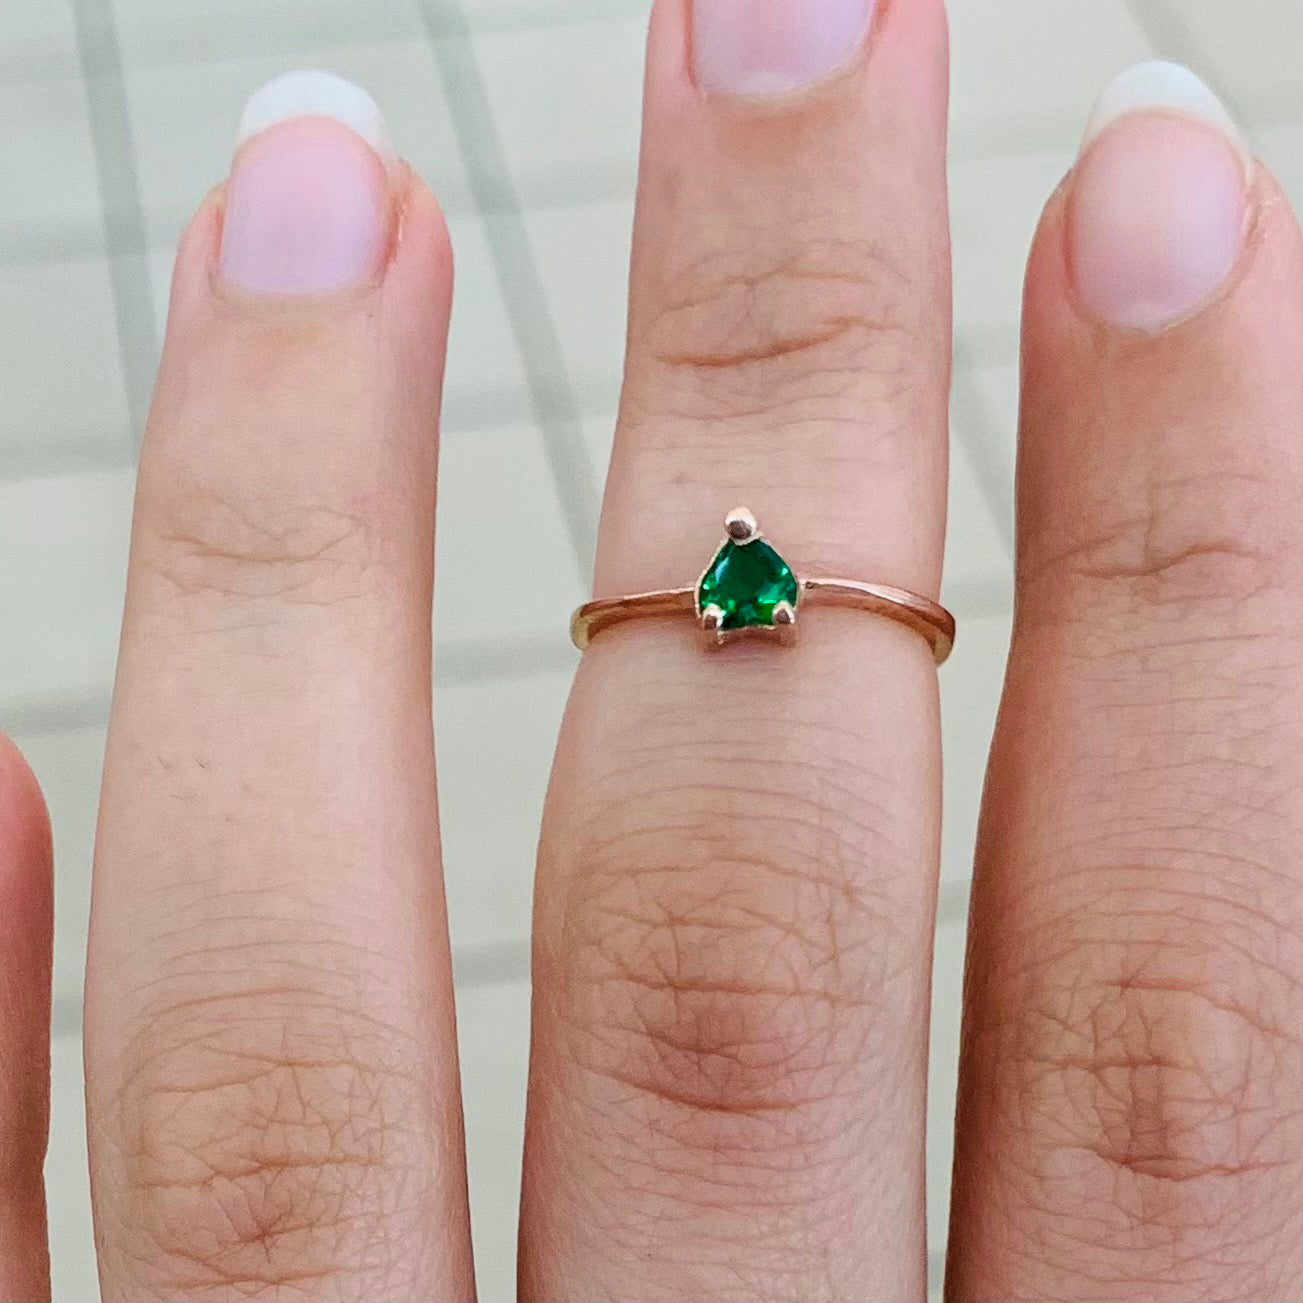 How to Wear a Emerald Gemstone (Panna Stone)